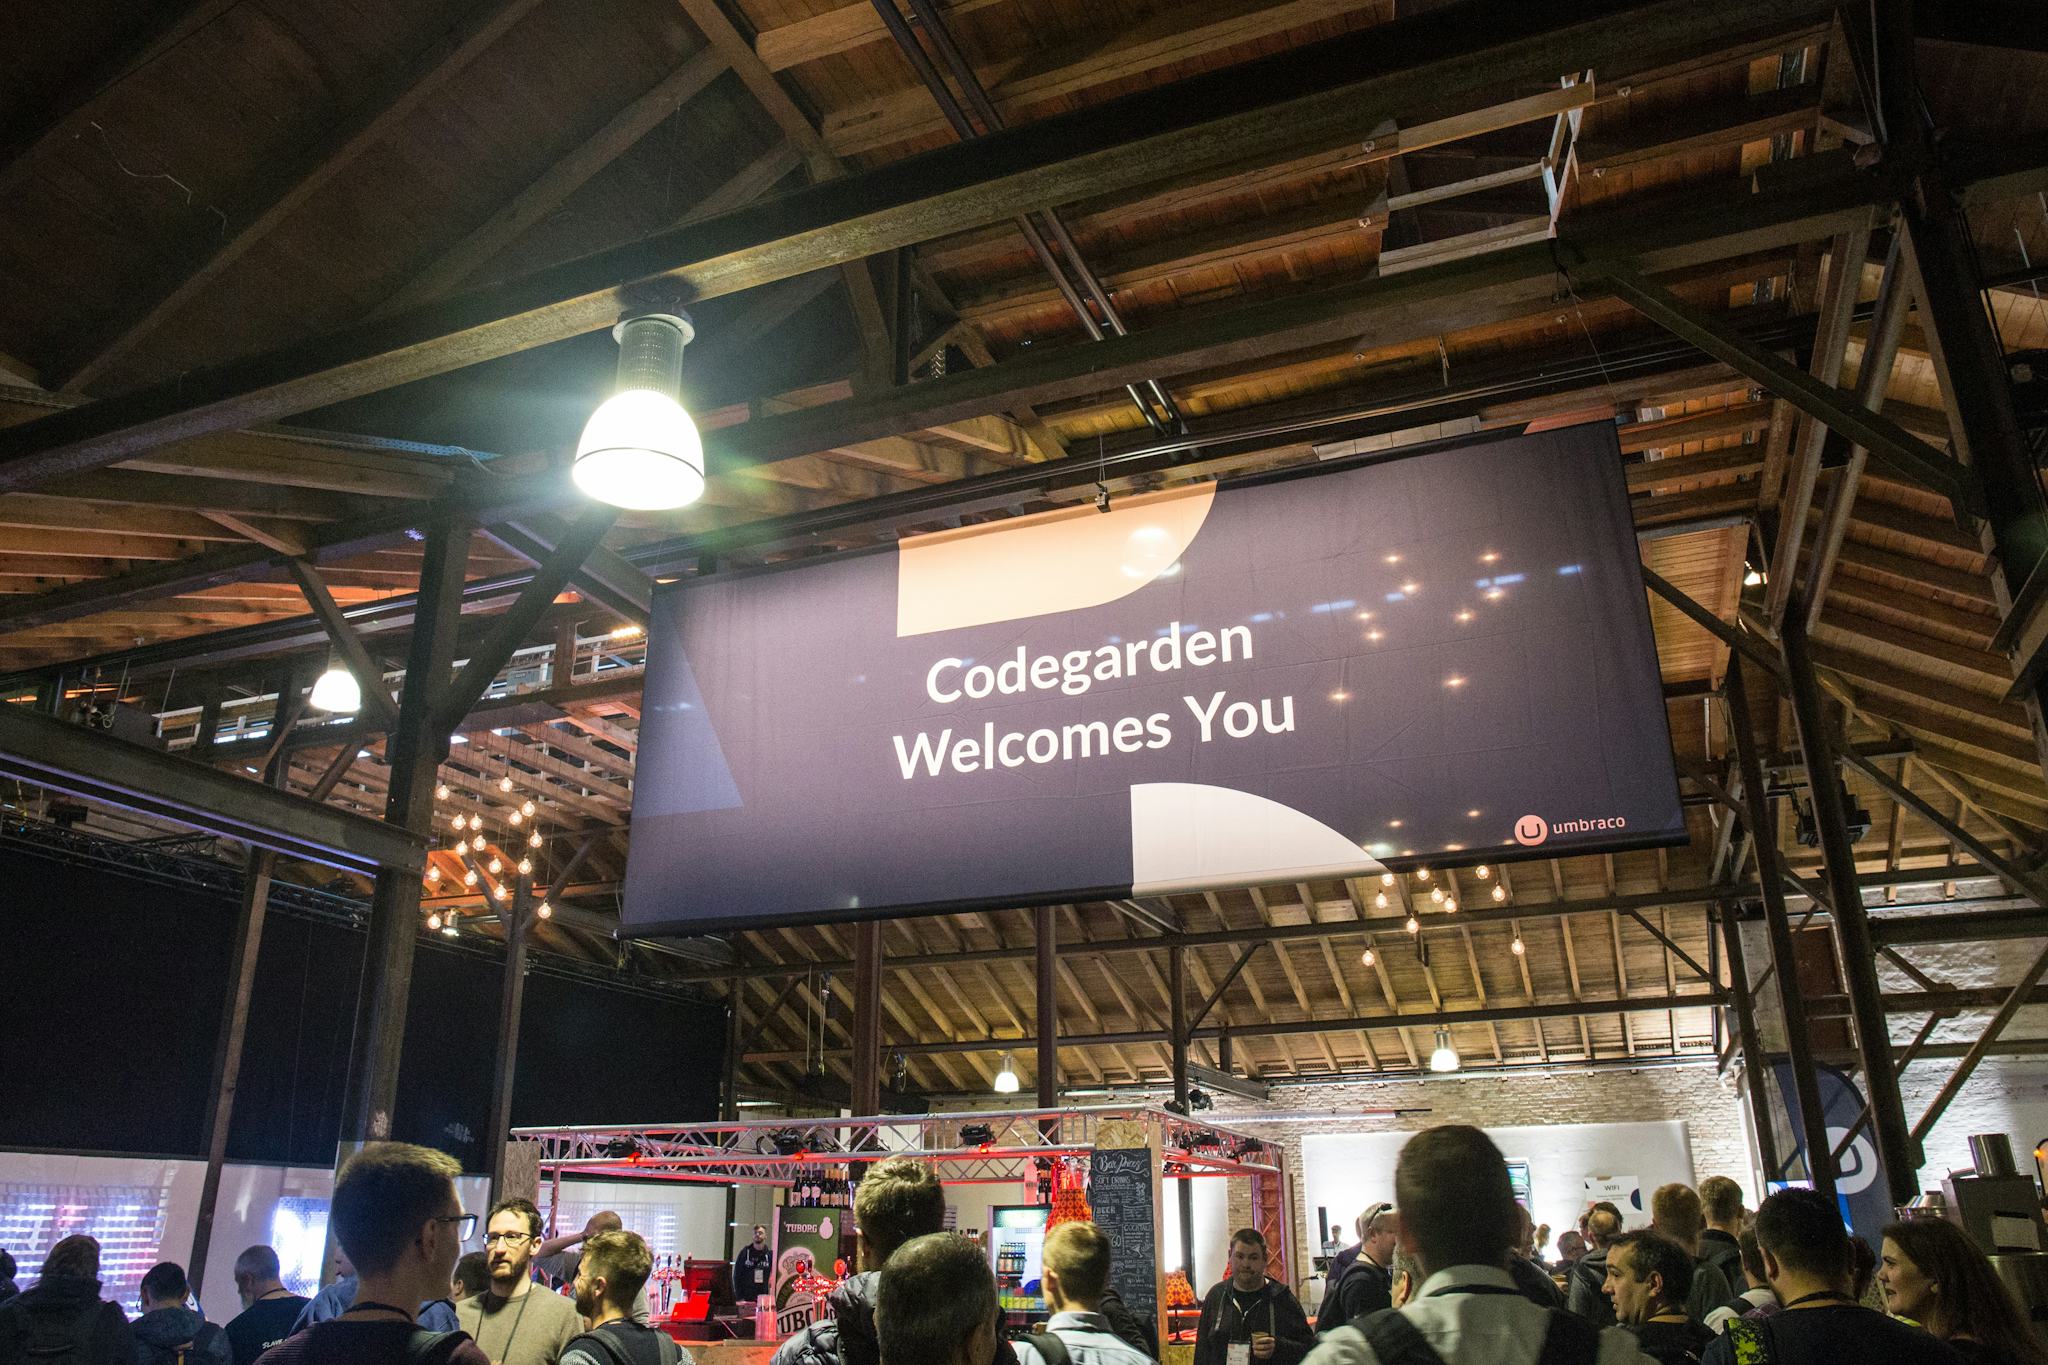 Codegarden Welcomes You